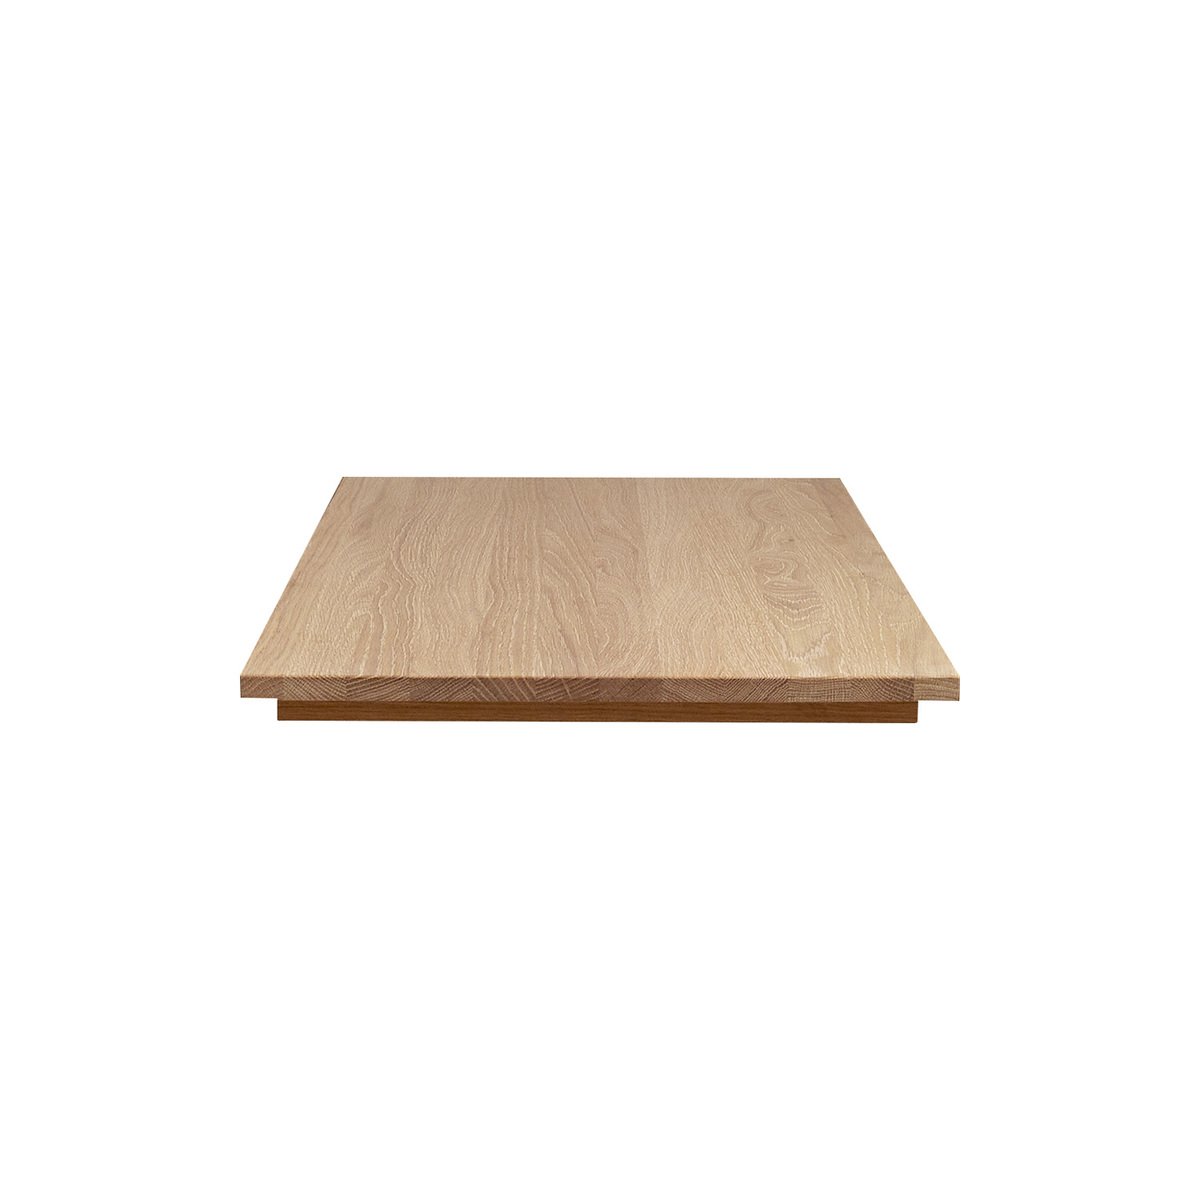 30cm Solid Wood Plate Oak Plate Oak Solid Table Natural Edge American Oak 